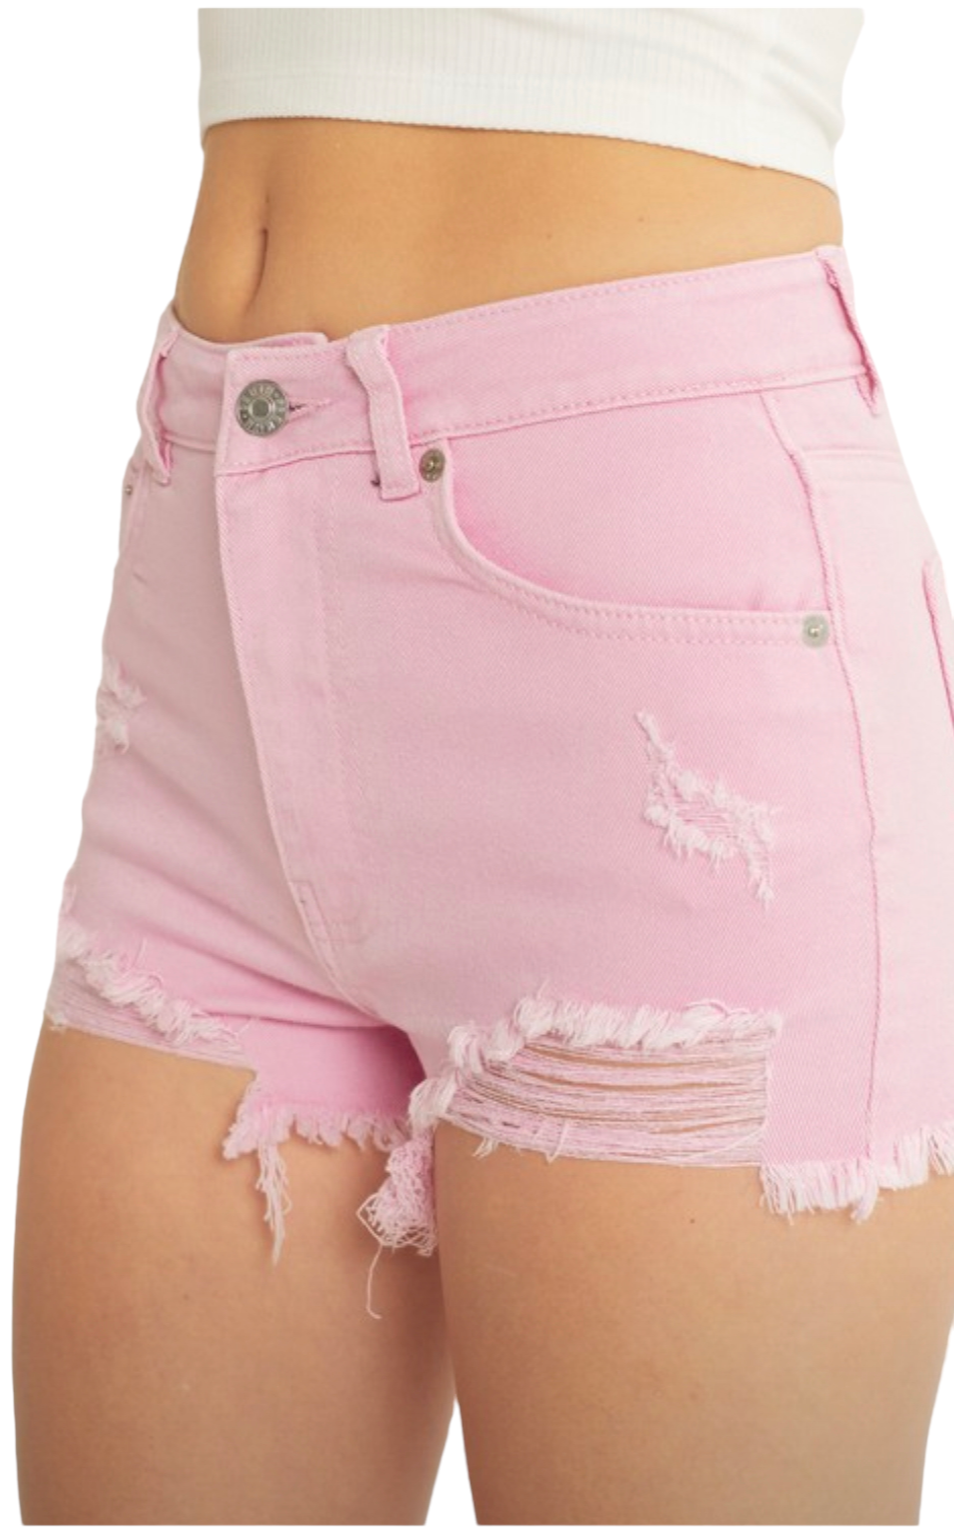 Pink frayed denim shorts